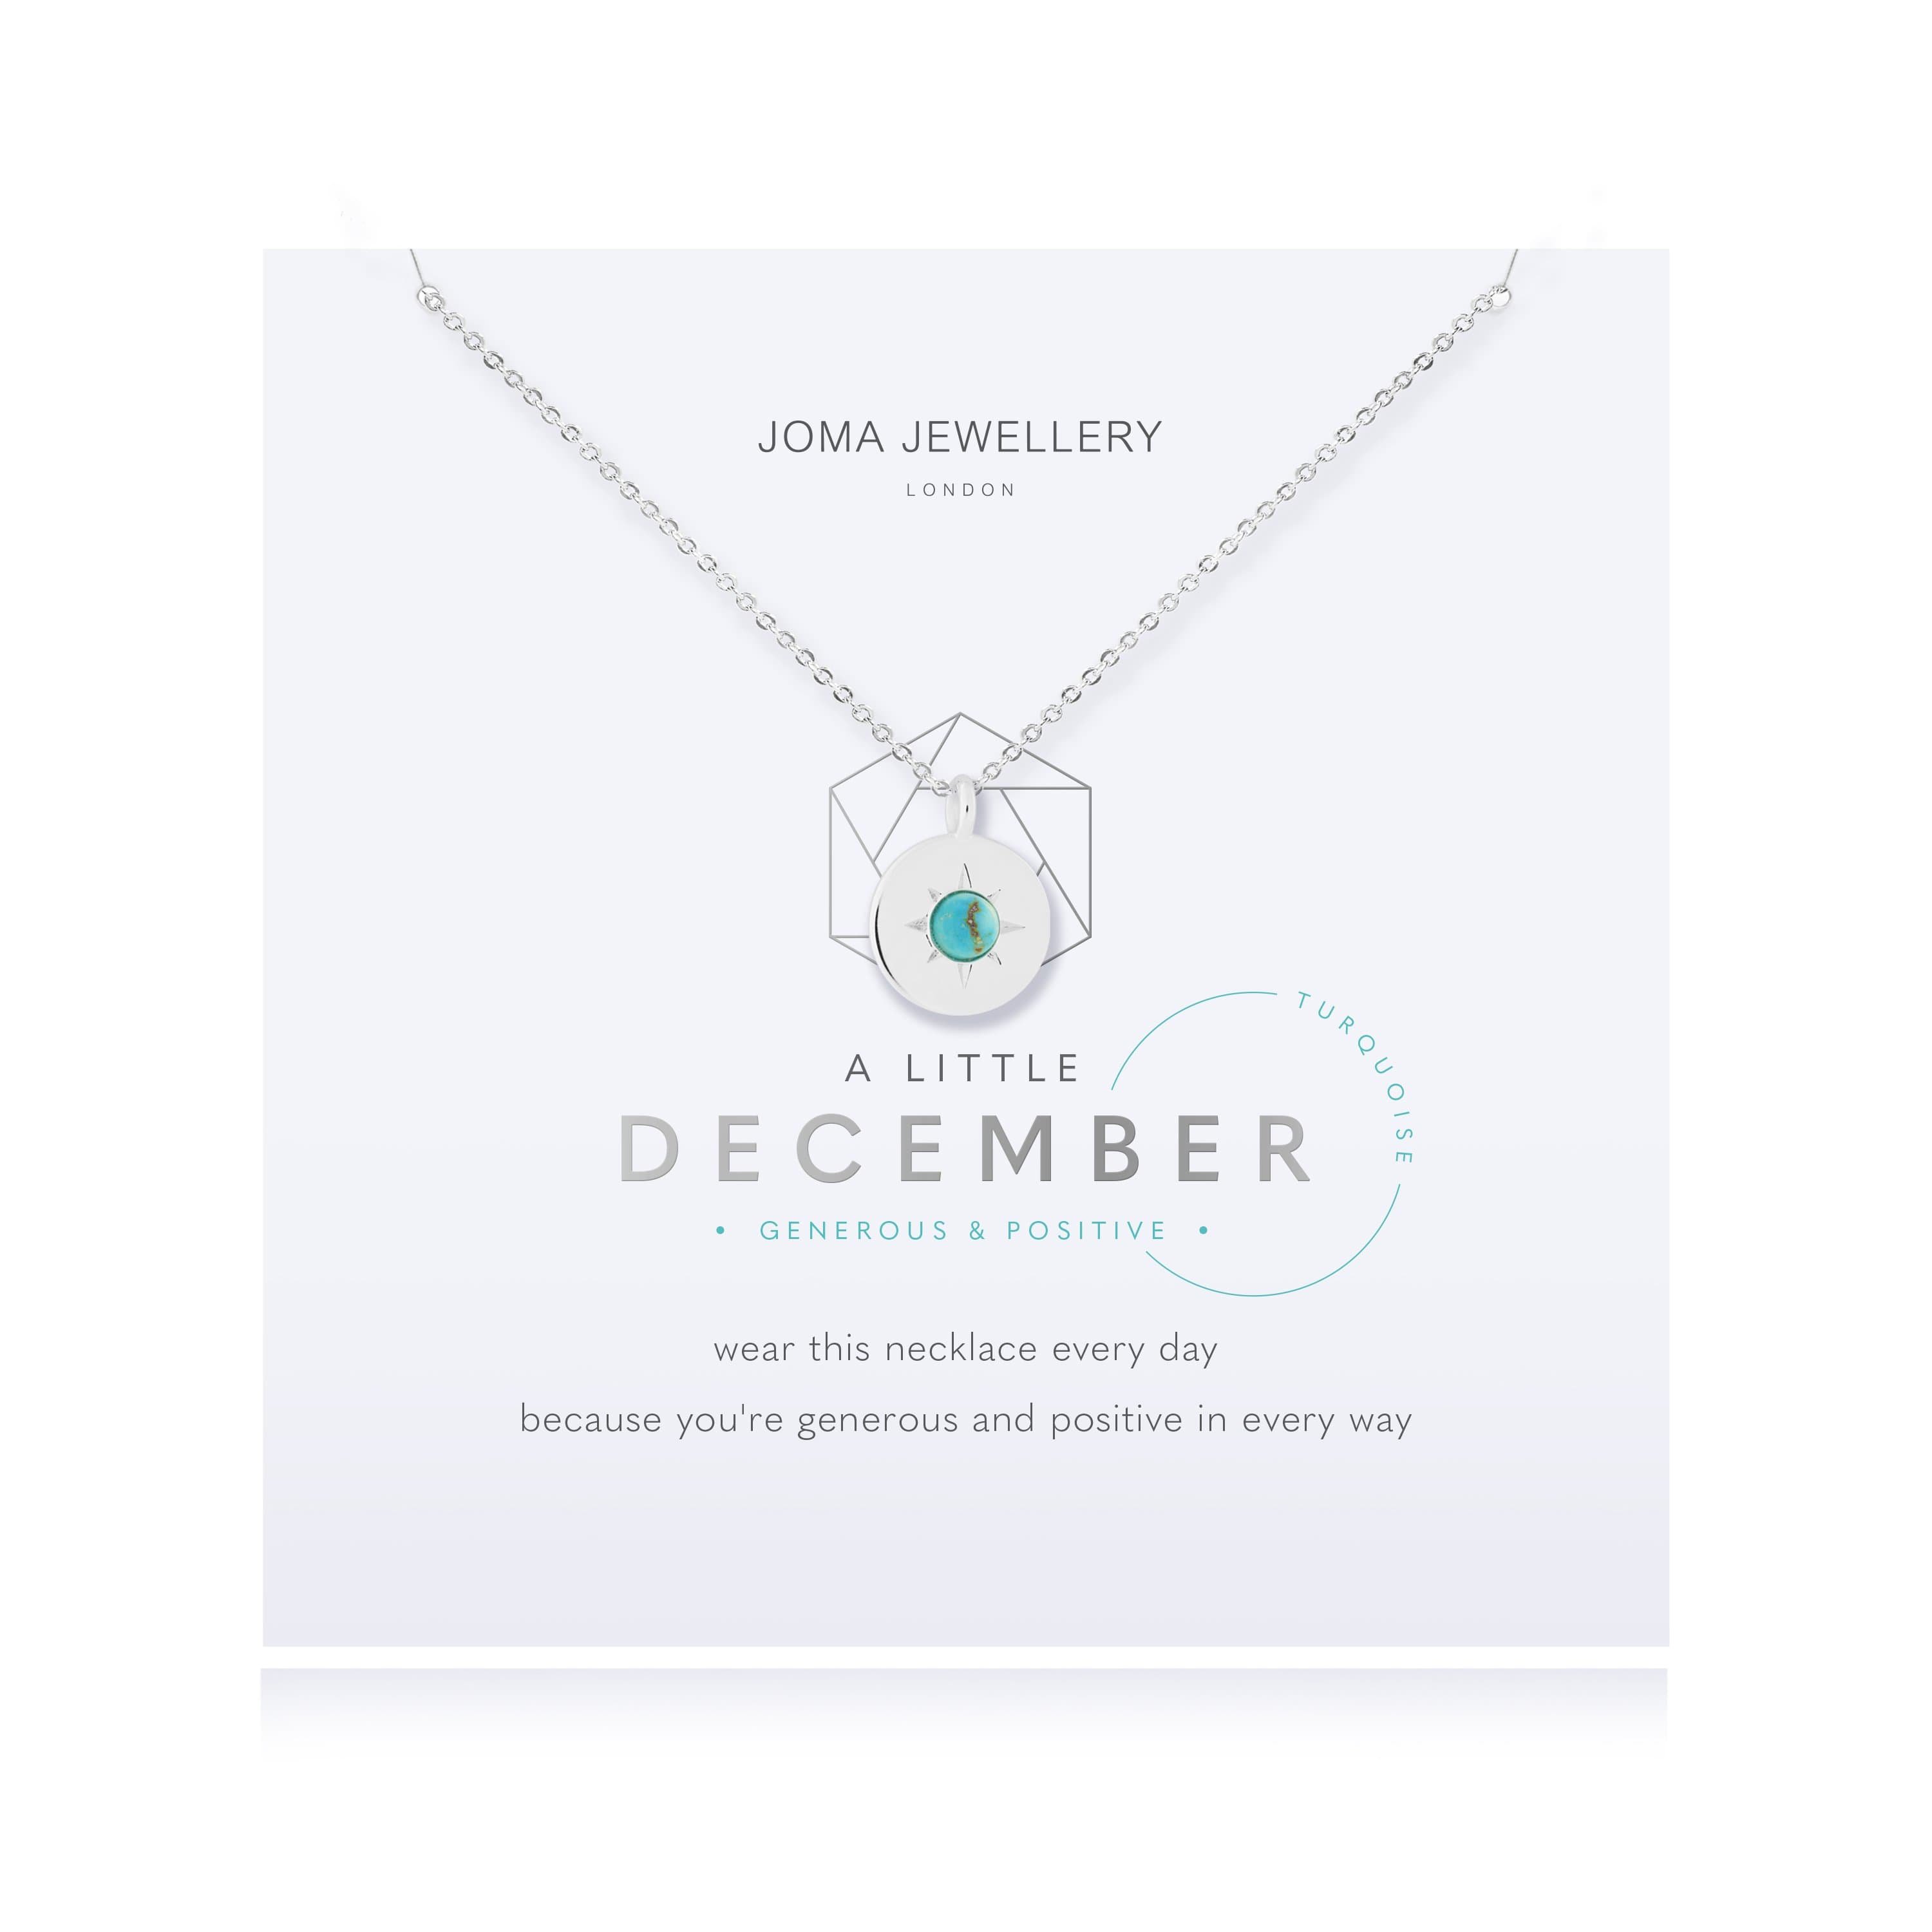 Joma Jewellery Necklace Joma Jewellery Necklace - Birthstone - December - Turquoise